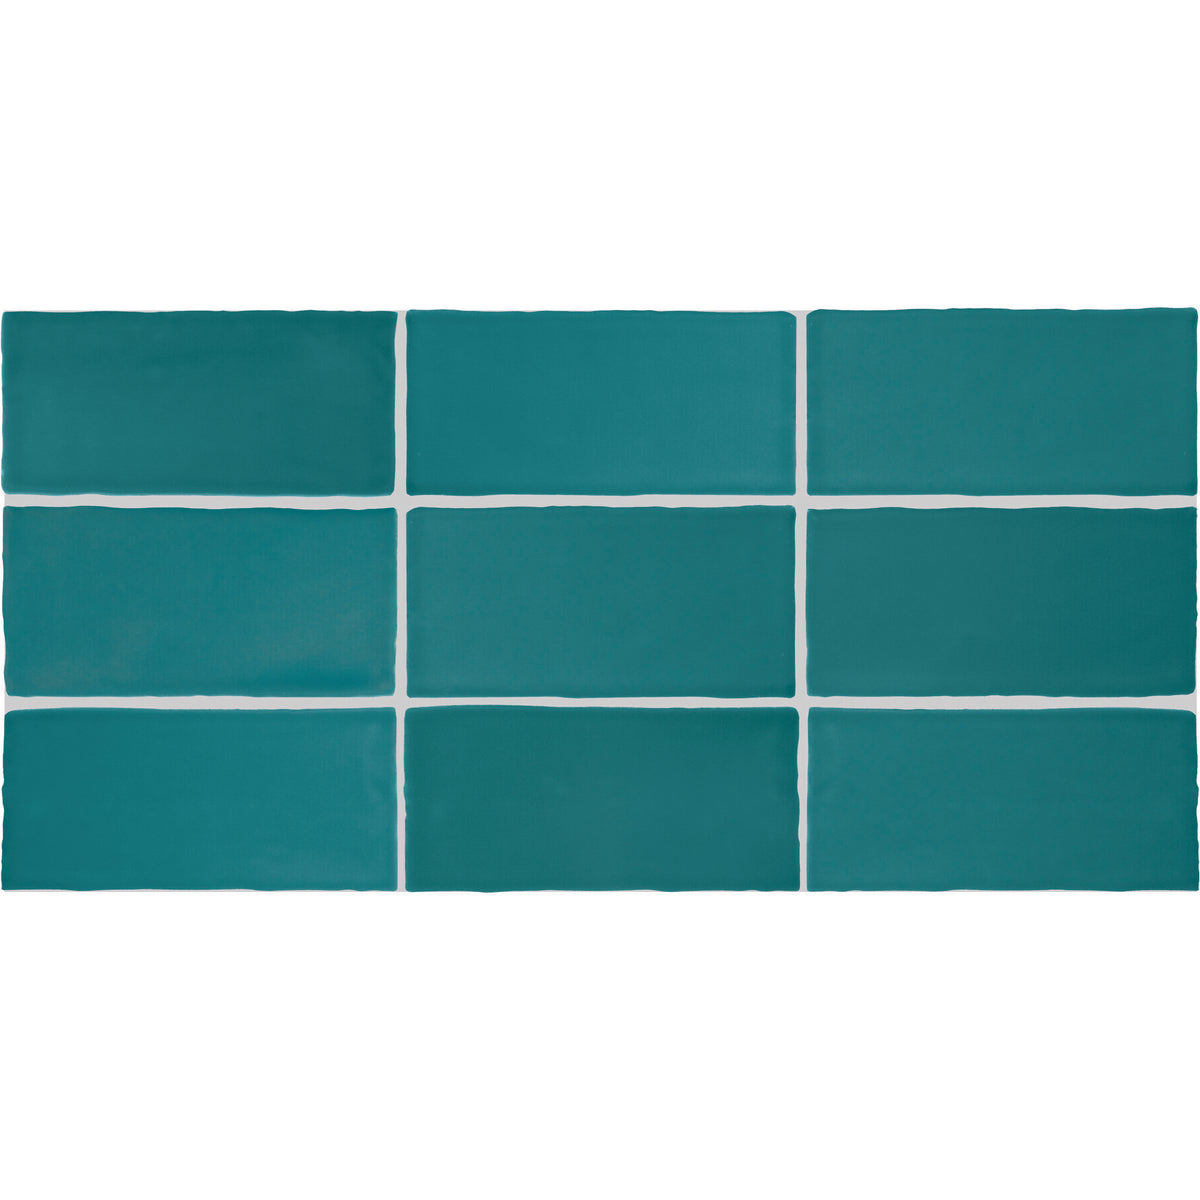 Daltile - Farrier - 2.5 in. x 5 in. Glazed Ceramic Wall Tile - Blue Roan Variation View